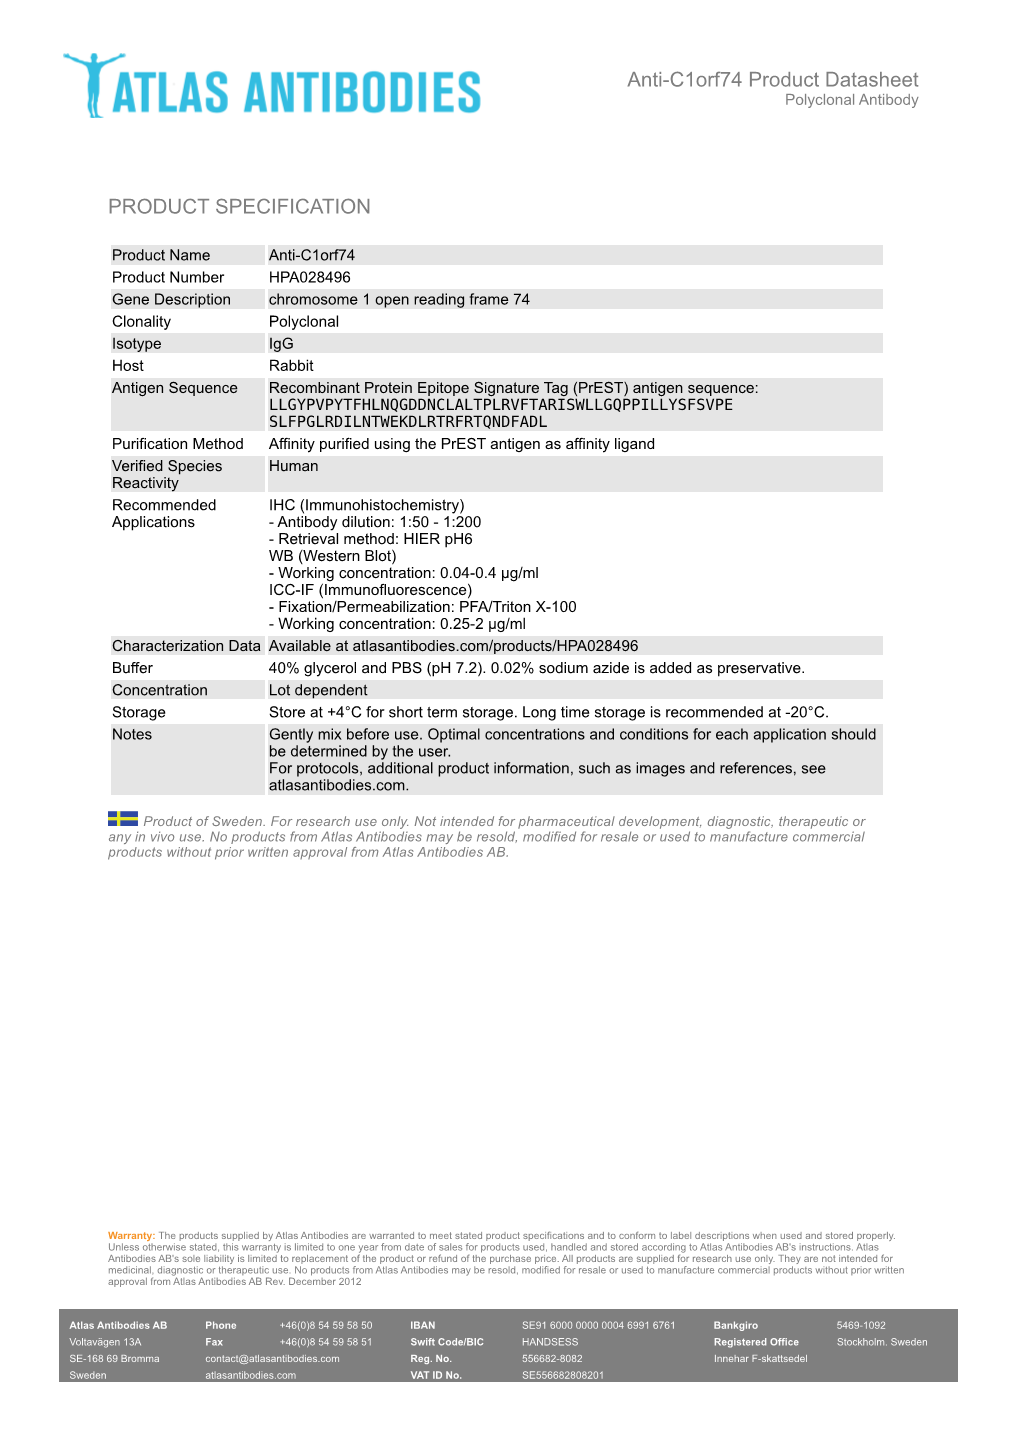 PRODUCT SPECIFICATION Anti-C1orf74 Product Datasheet